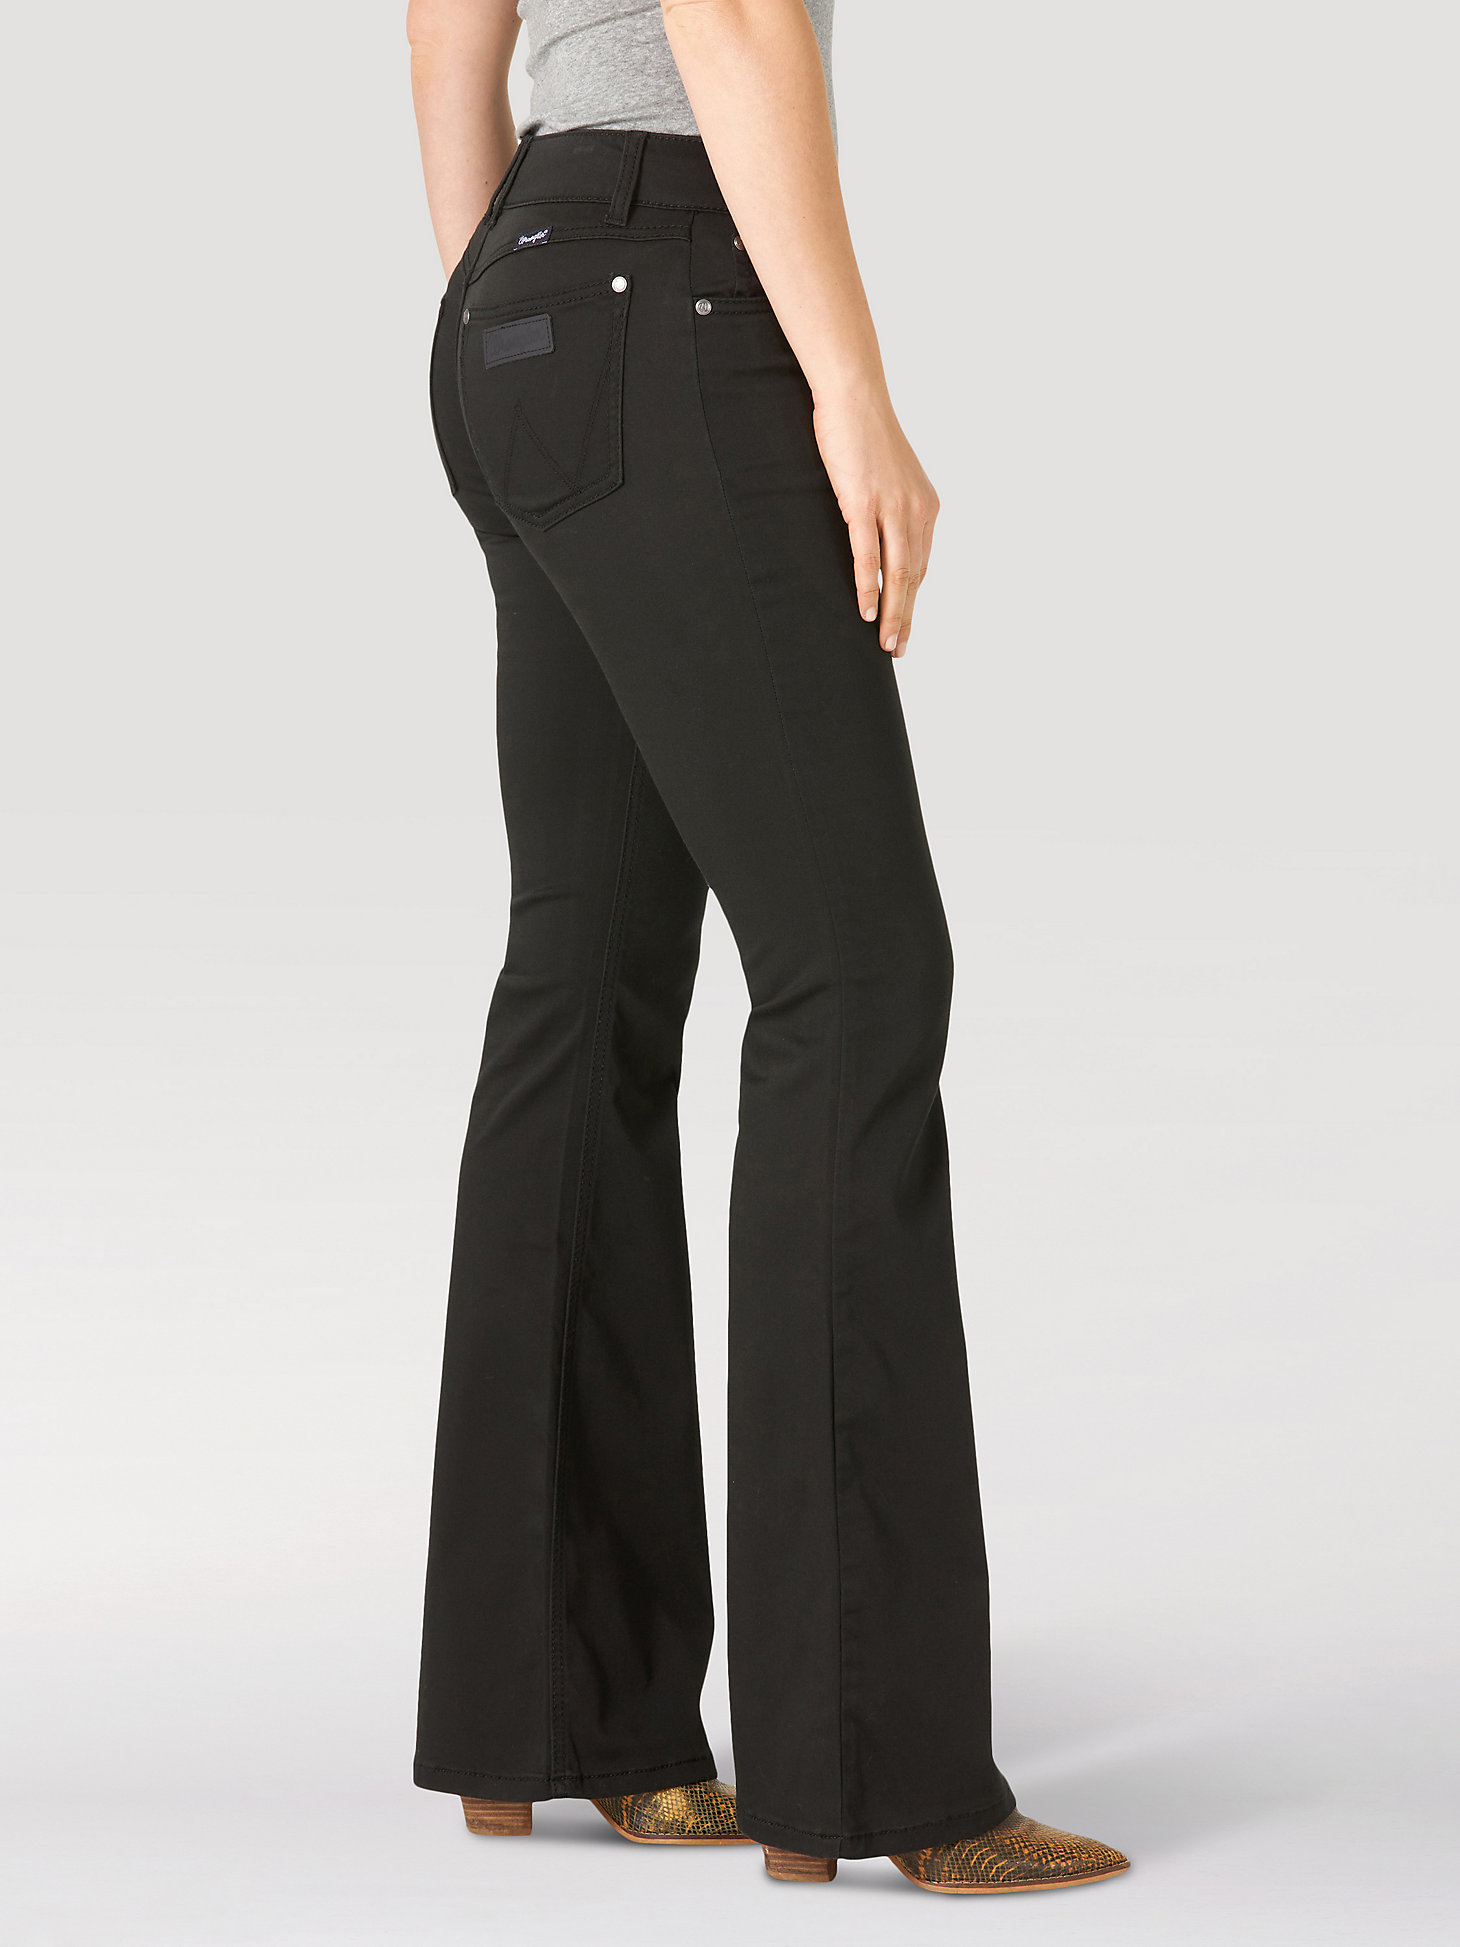 Women's Wrangler Retro® Mae Flare Jean in Black alternative view 1